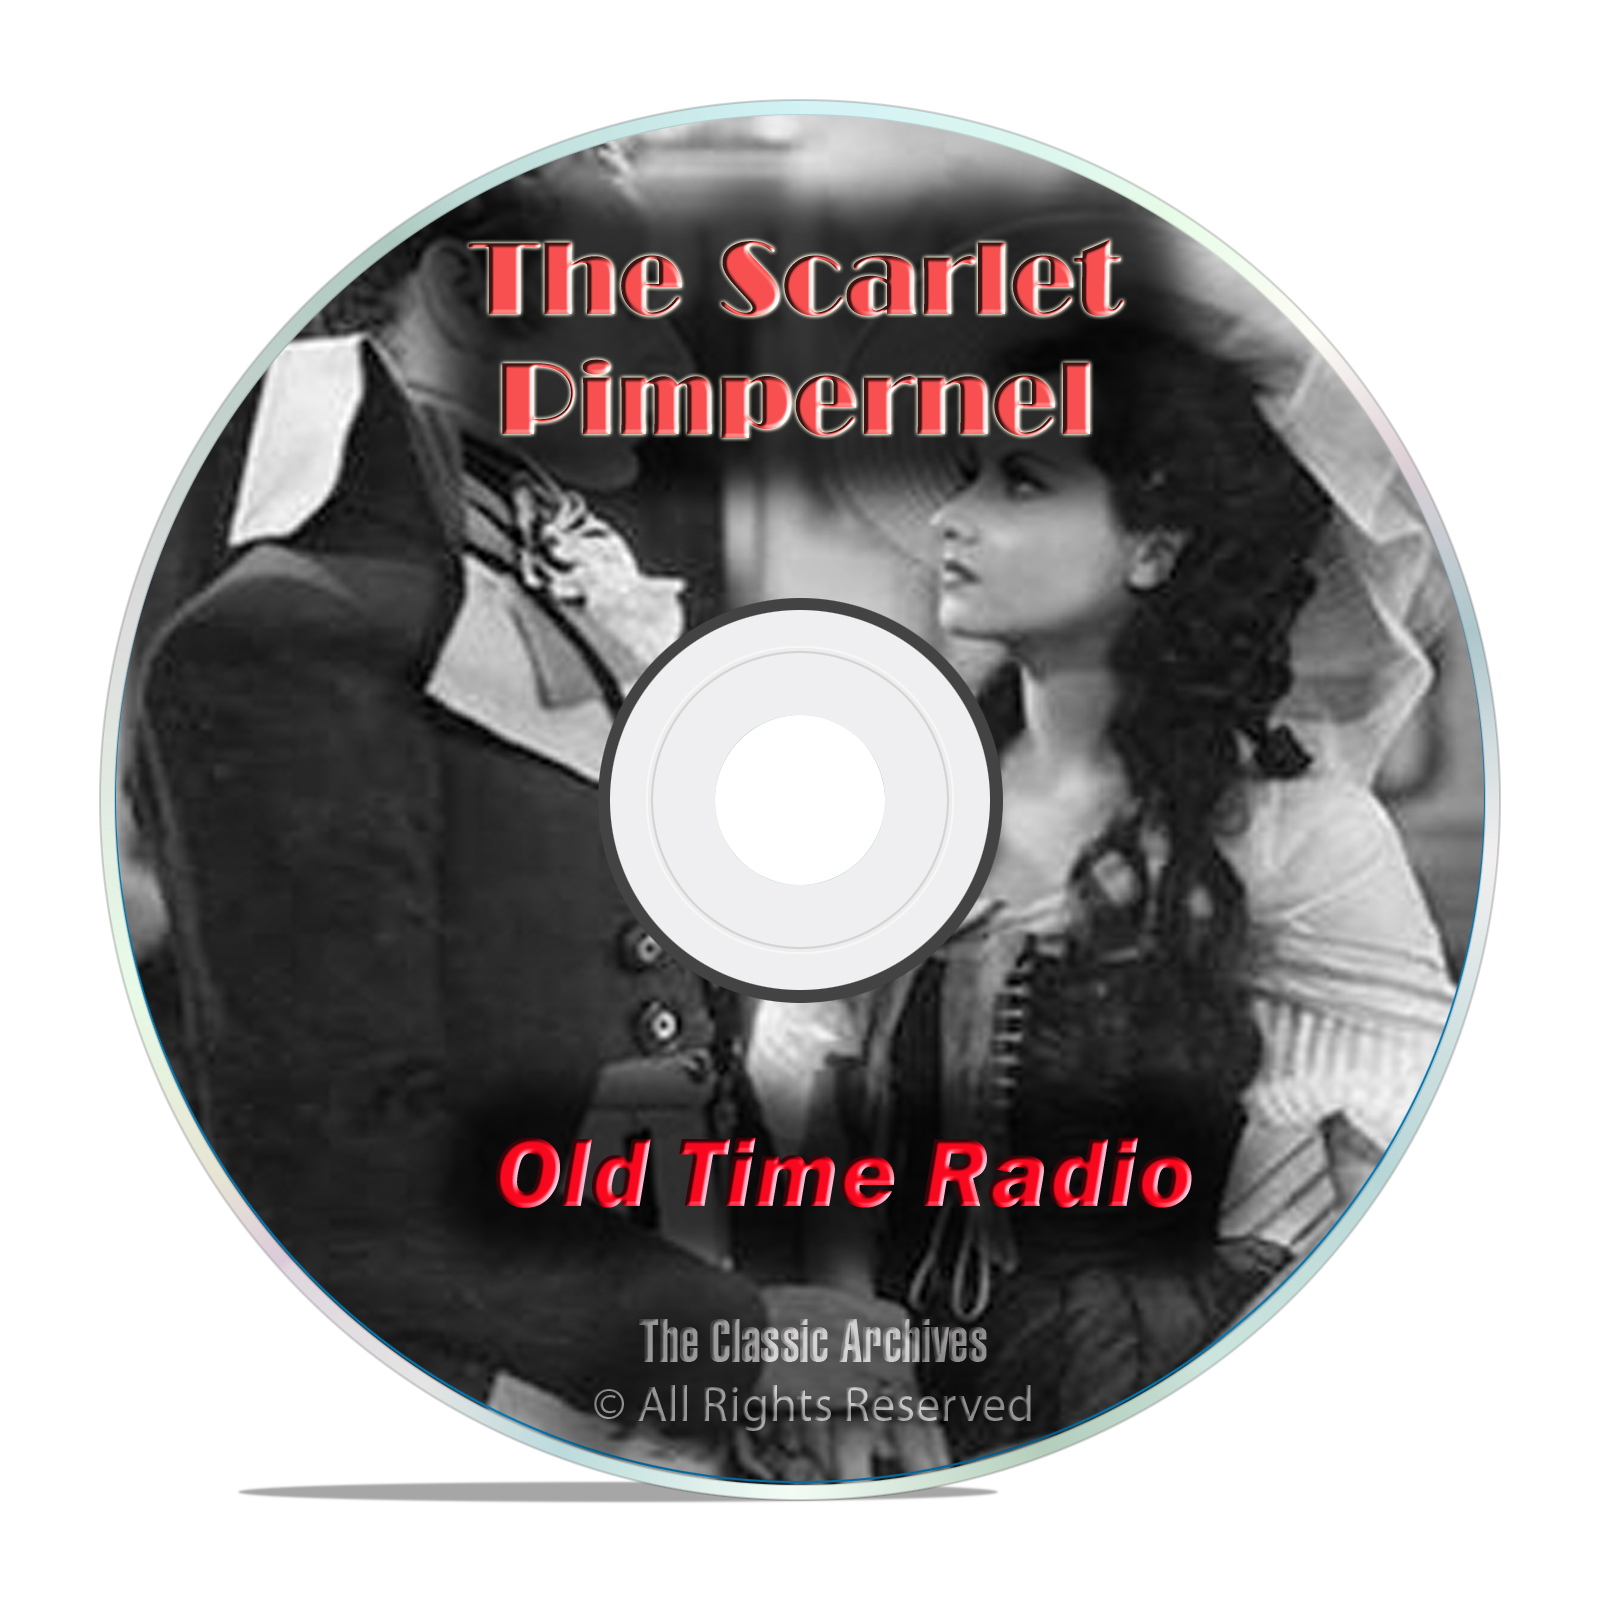 The Scarlet Pimpernel, 483 Old Time Radio Shows, British Drama, mp3 DVD